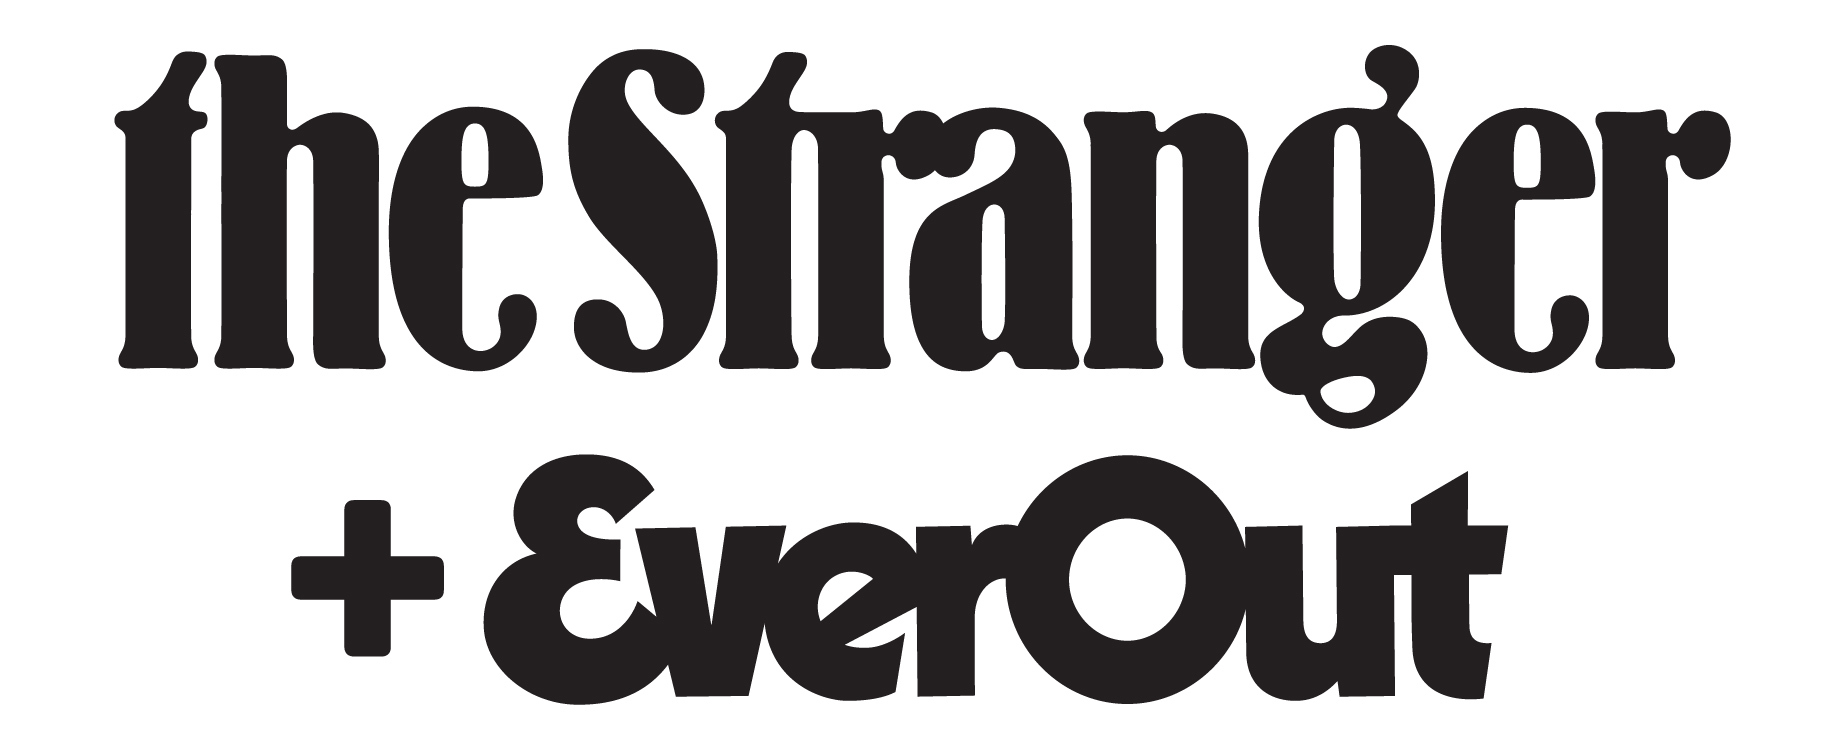 Stranger Everout logos